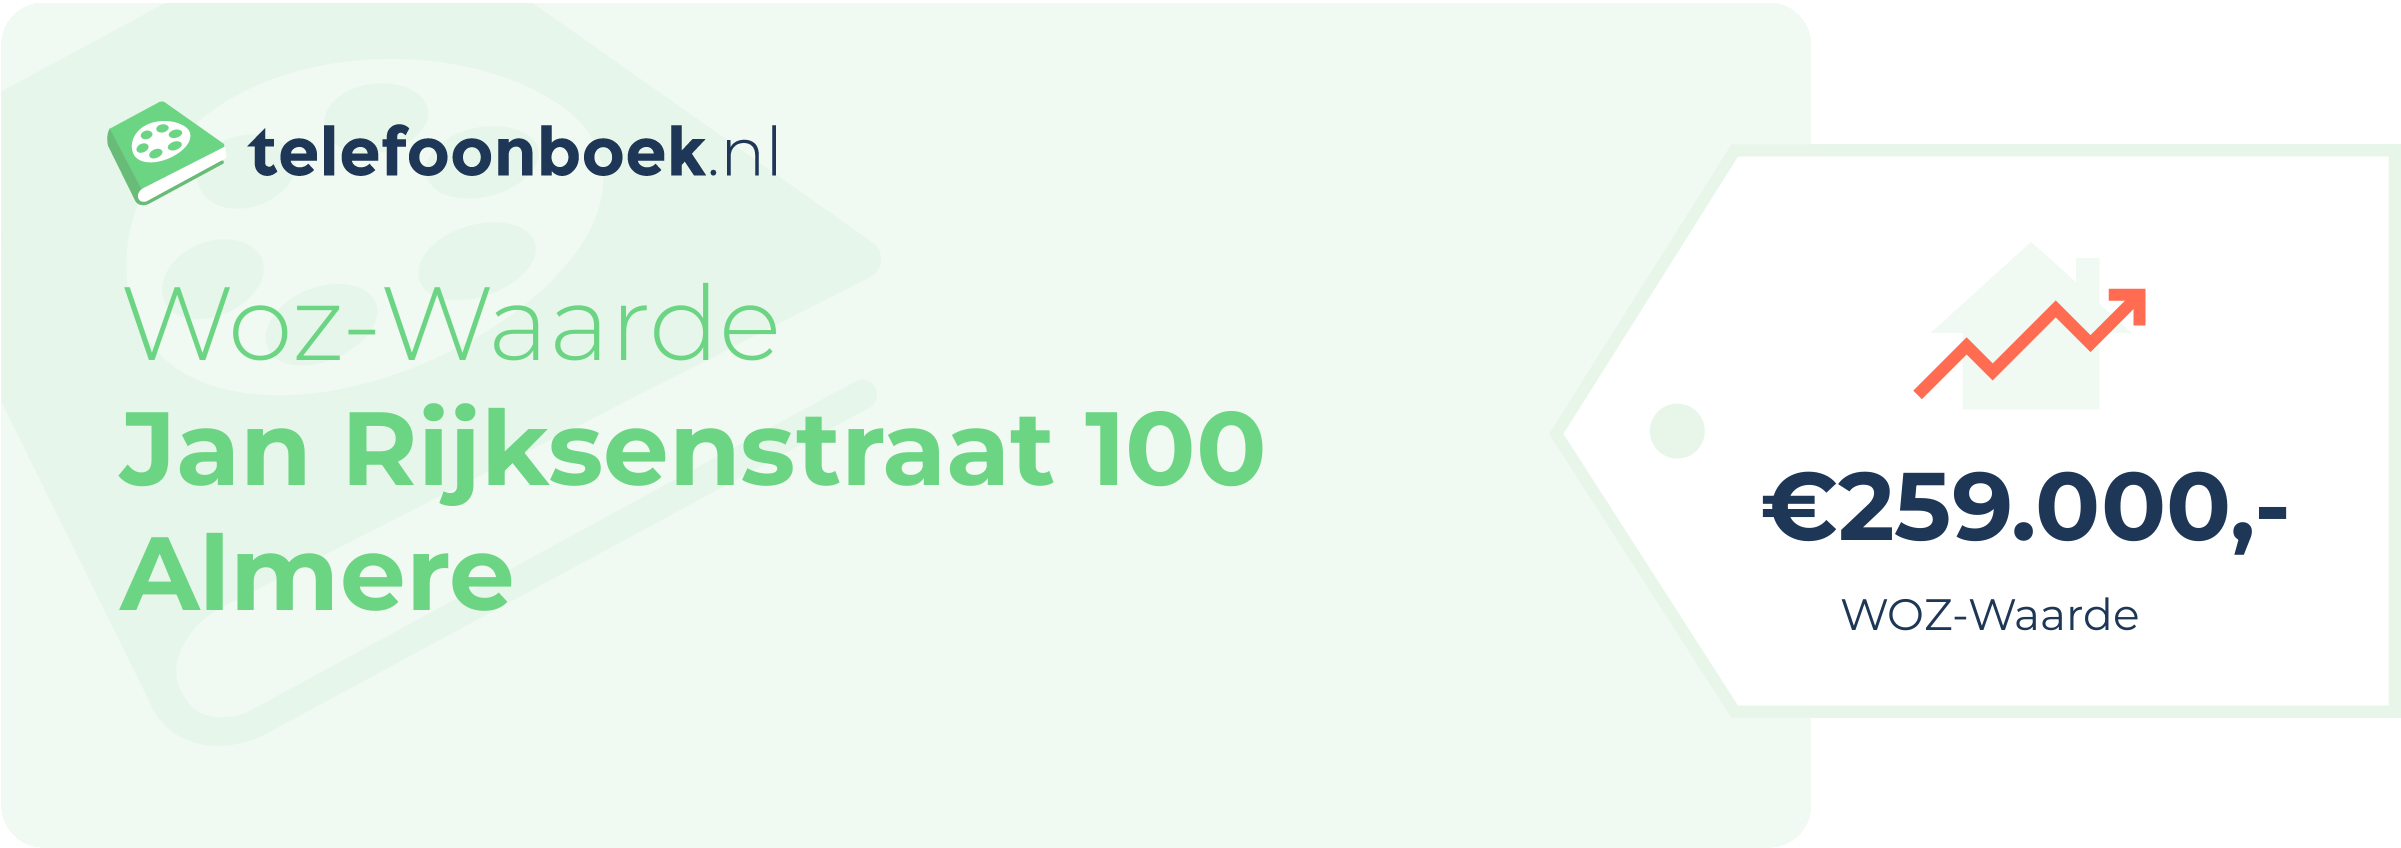 WOZ-waarde Jan Rijksenstraat 100 Almere